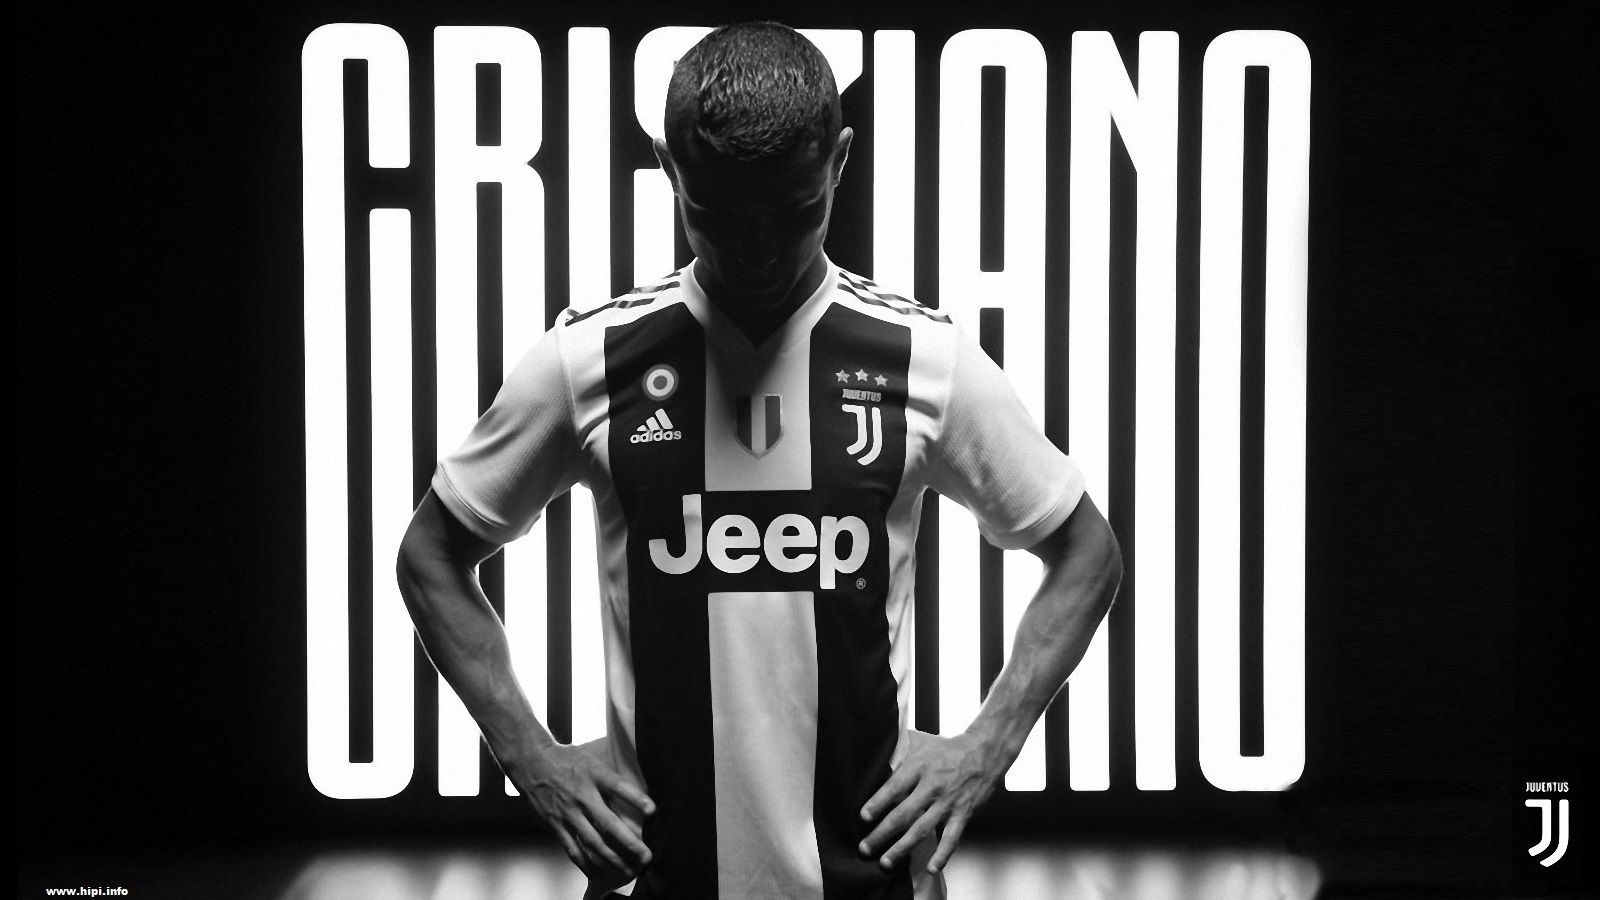 Cristiano Ronaldo Juventus HD Wallpaper .hipi.info